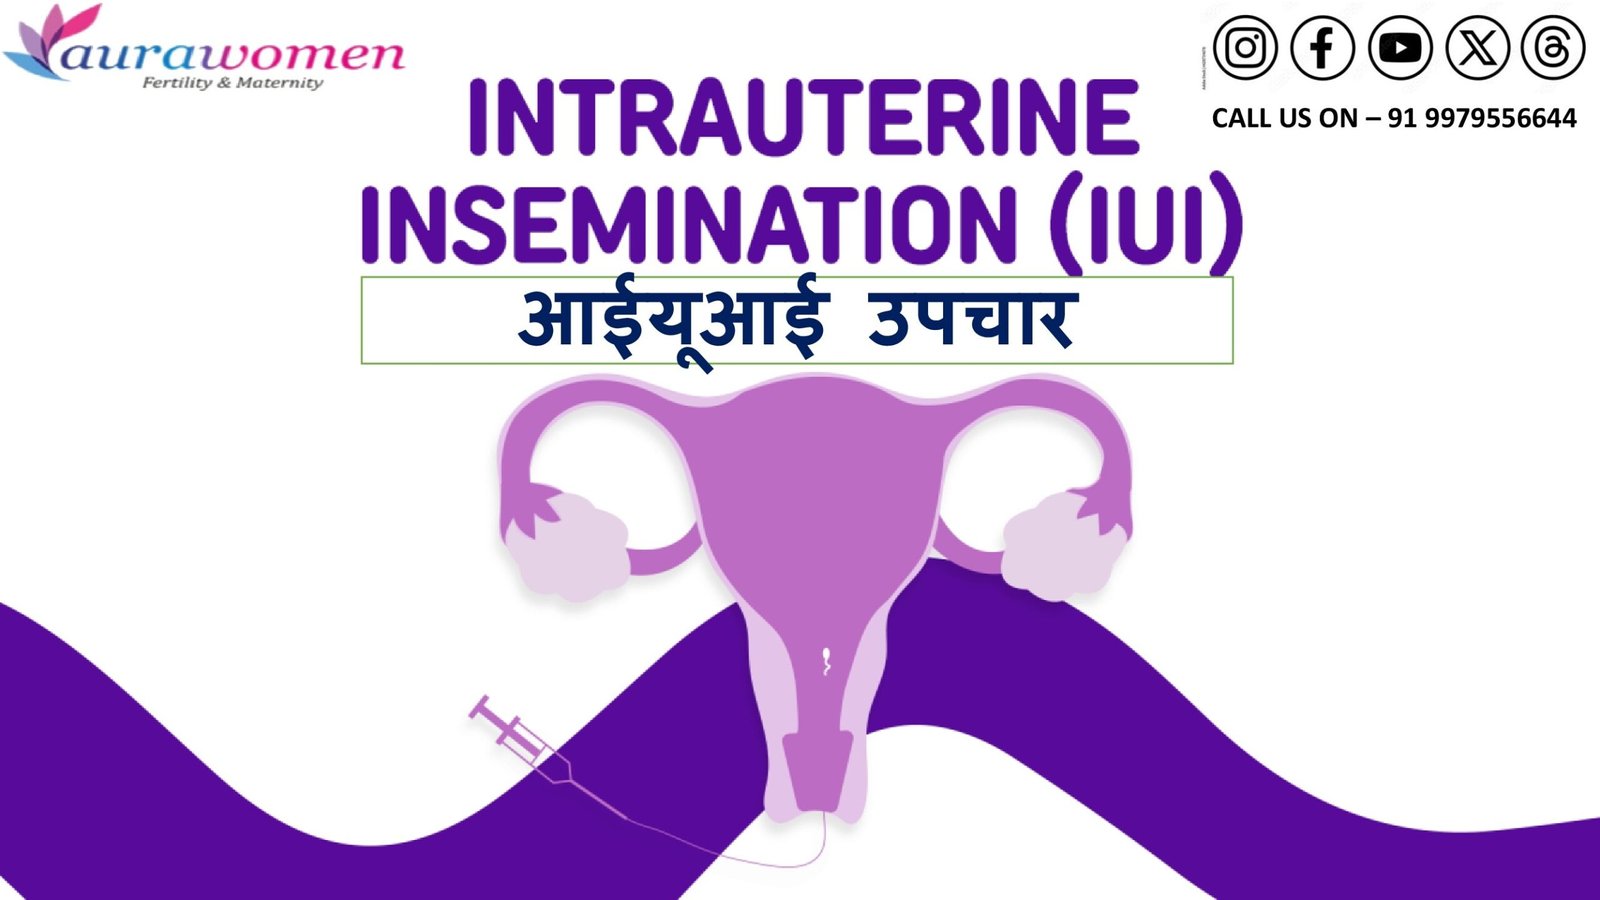 IUI Treatment in Hindi